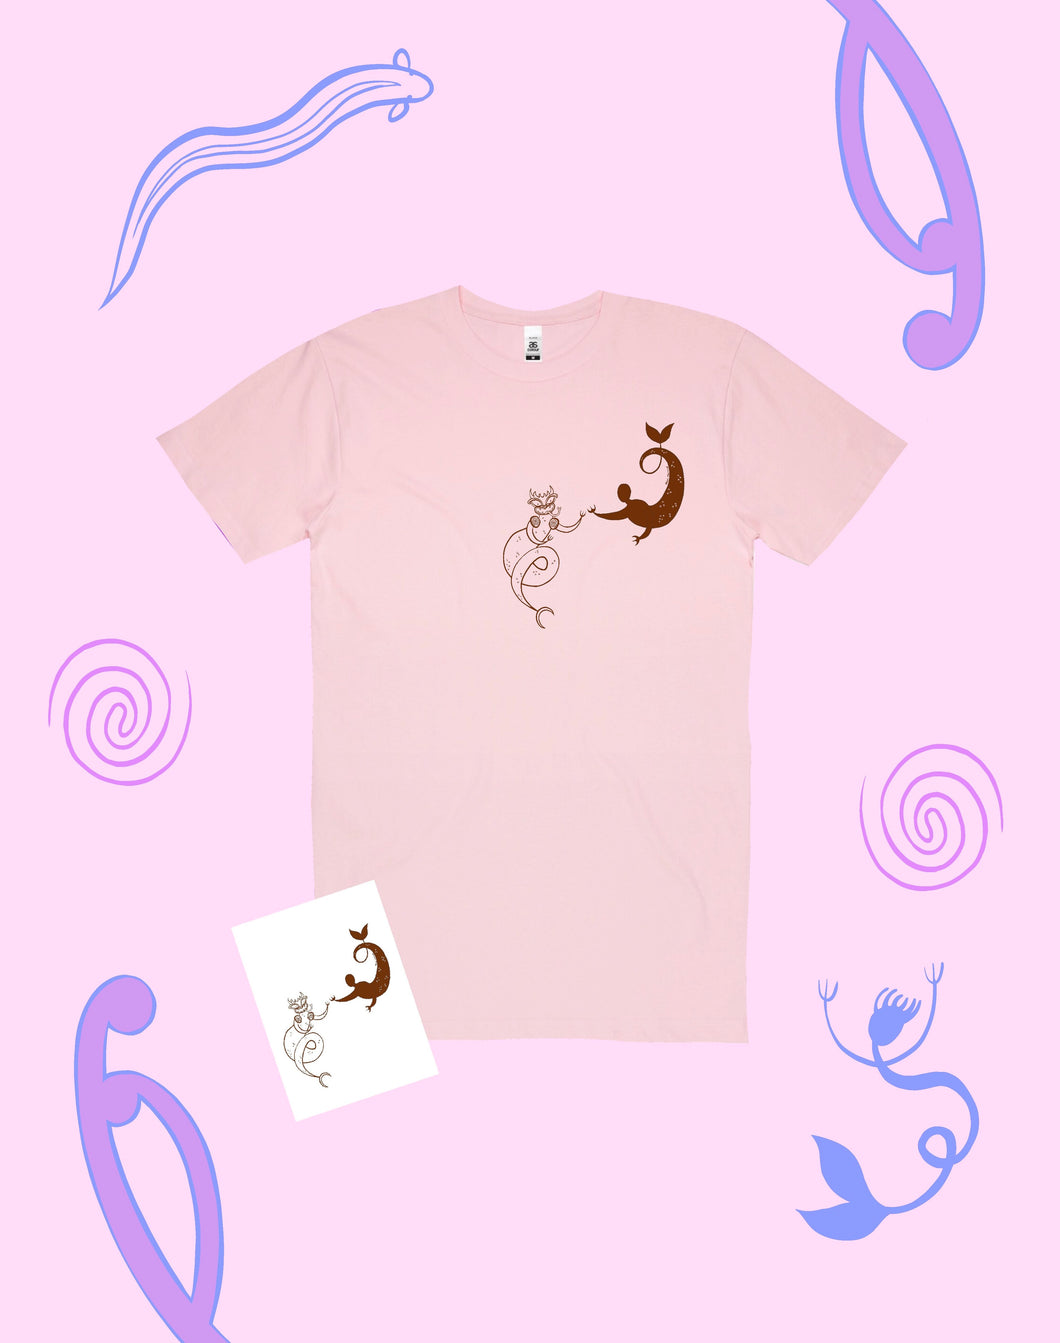 Marakihau x Mermaid T-Shirt